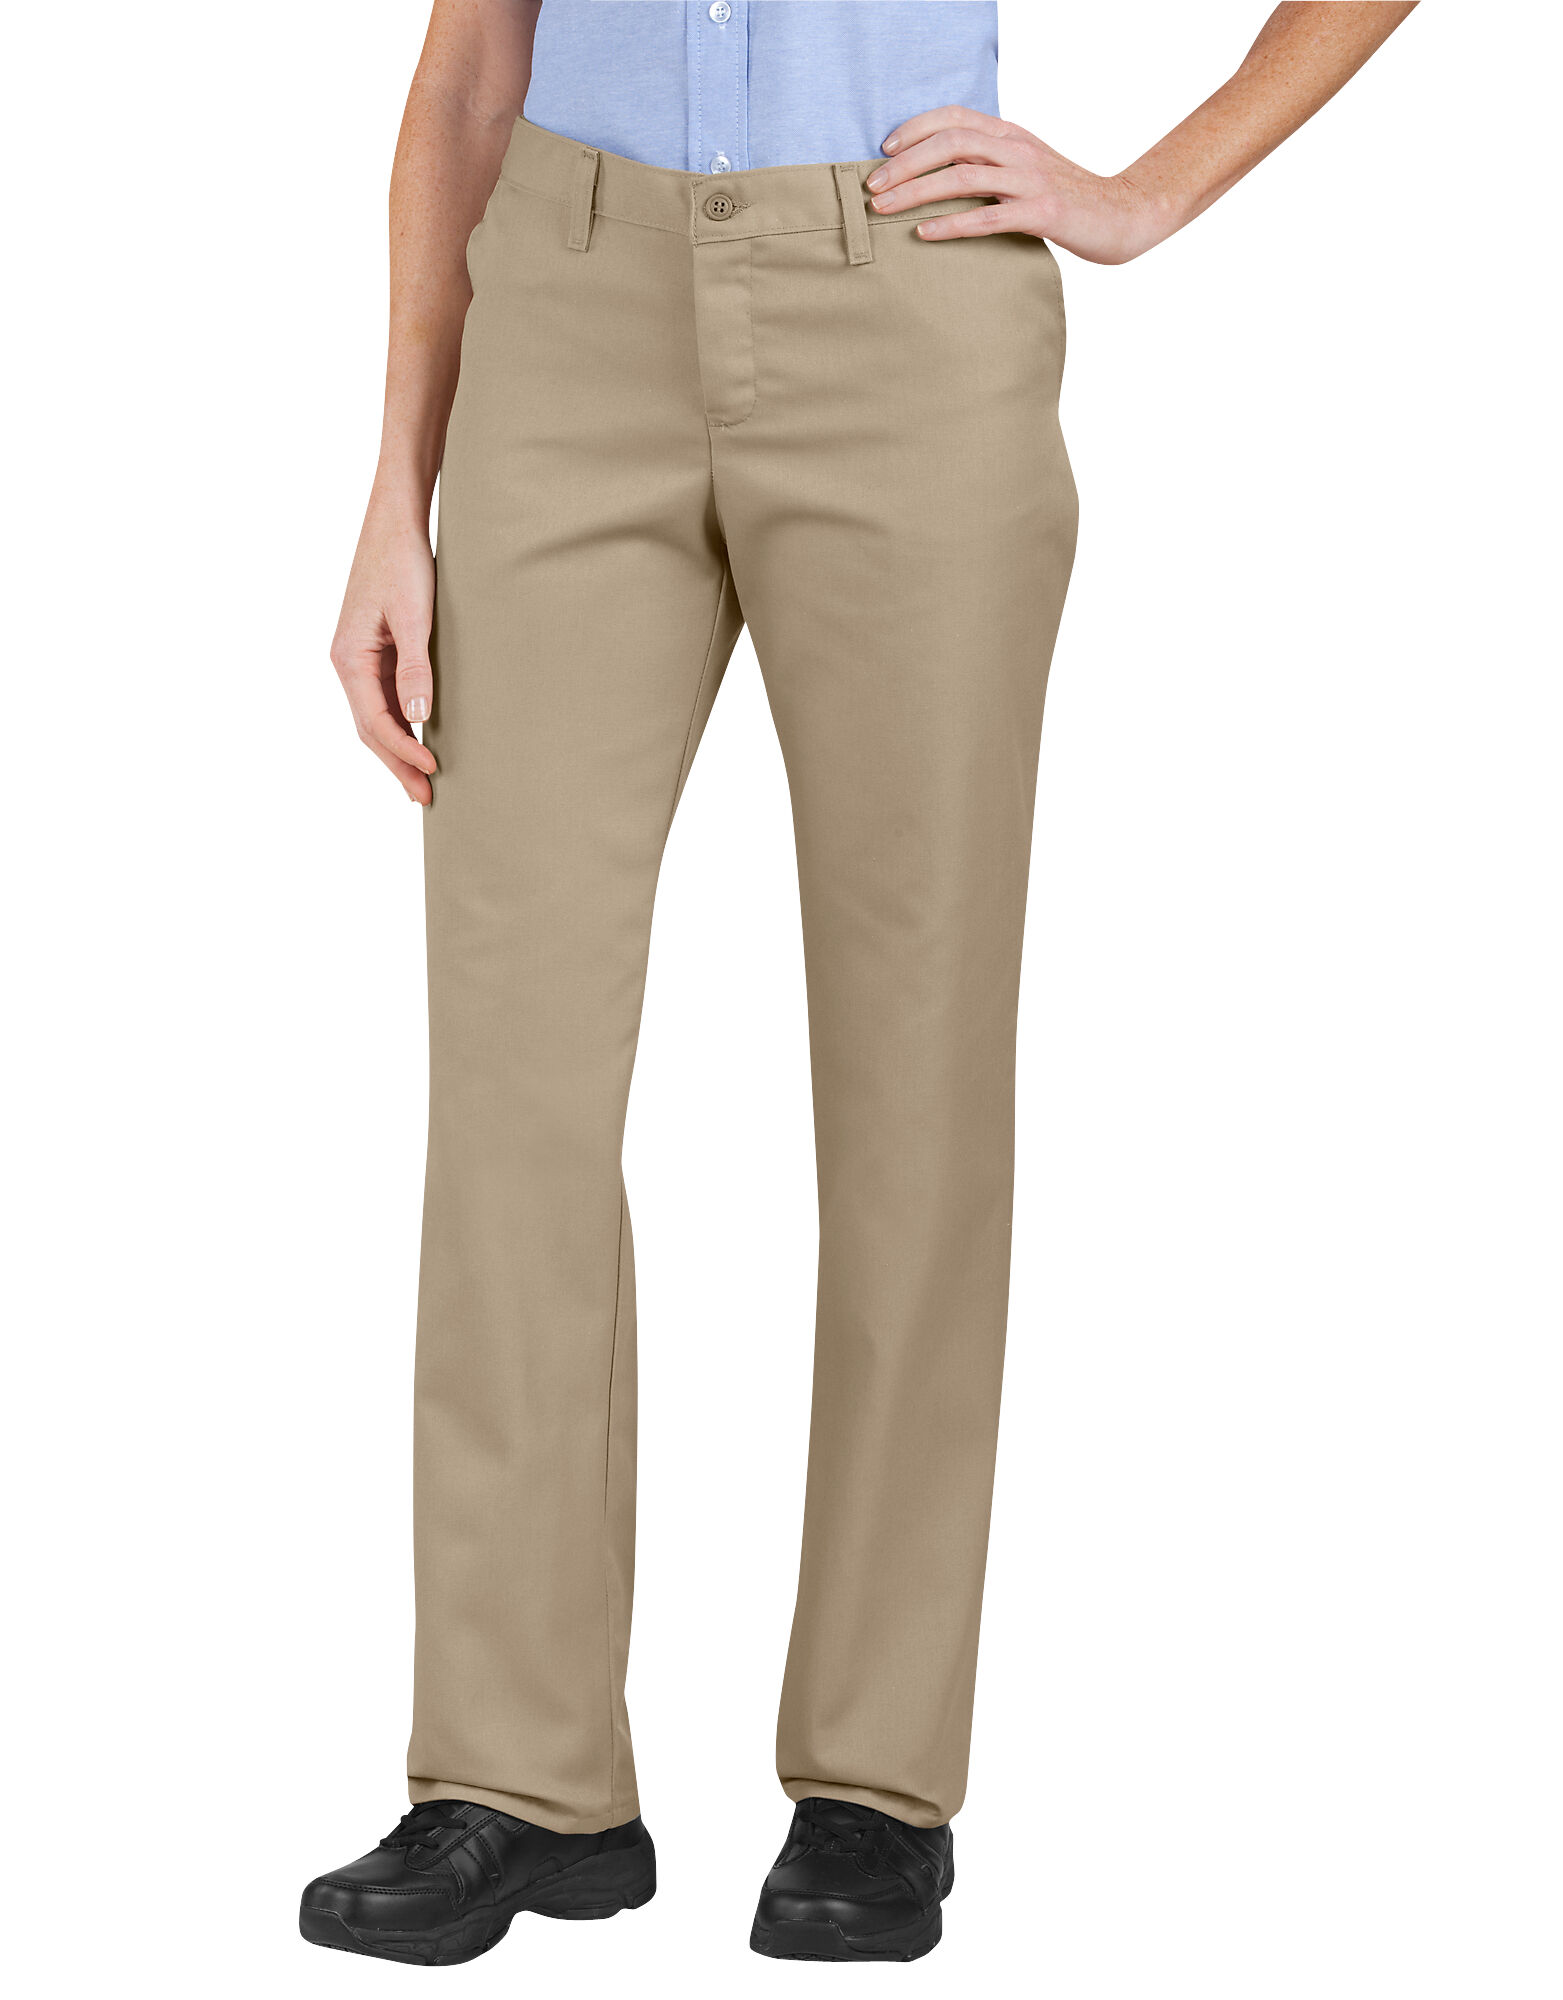 Women's Flat Front Comfort Waist Pants Military Khaki | Women's Pants ...